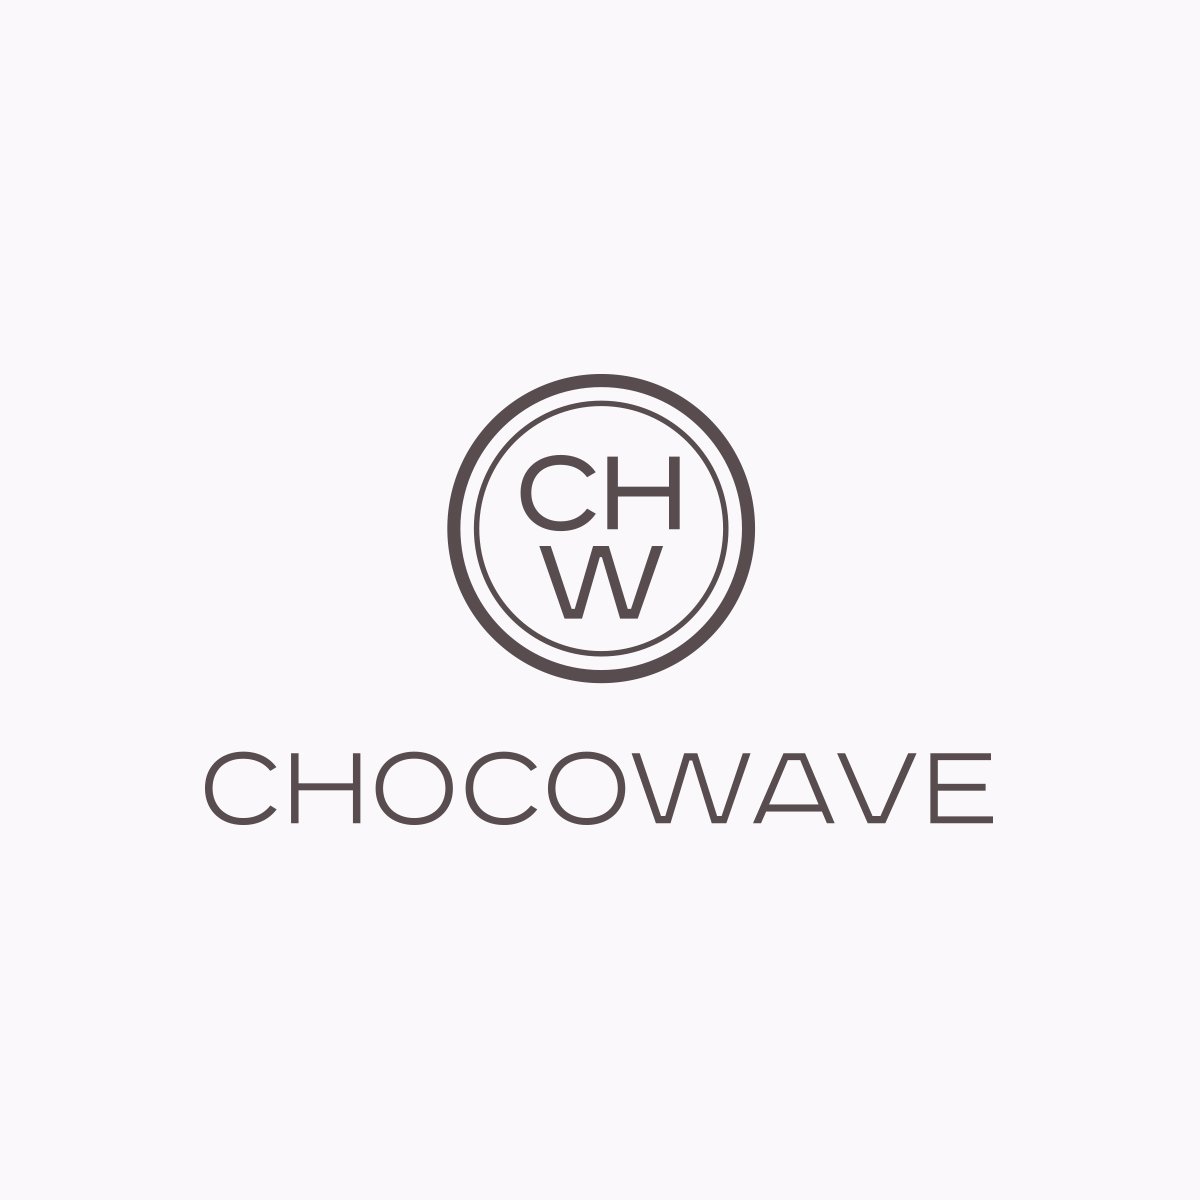 Chocowave